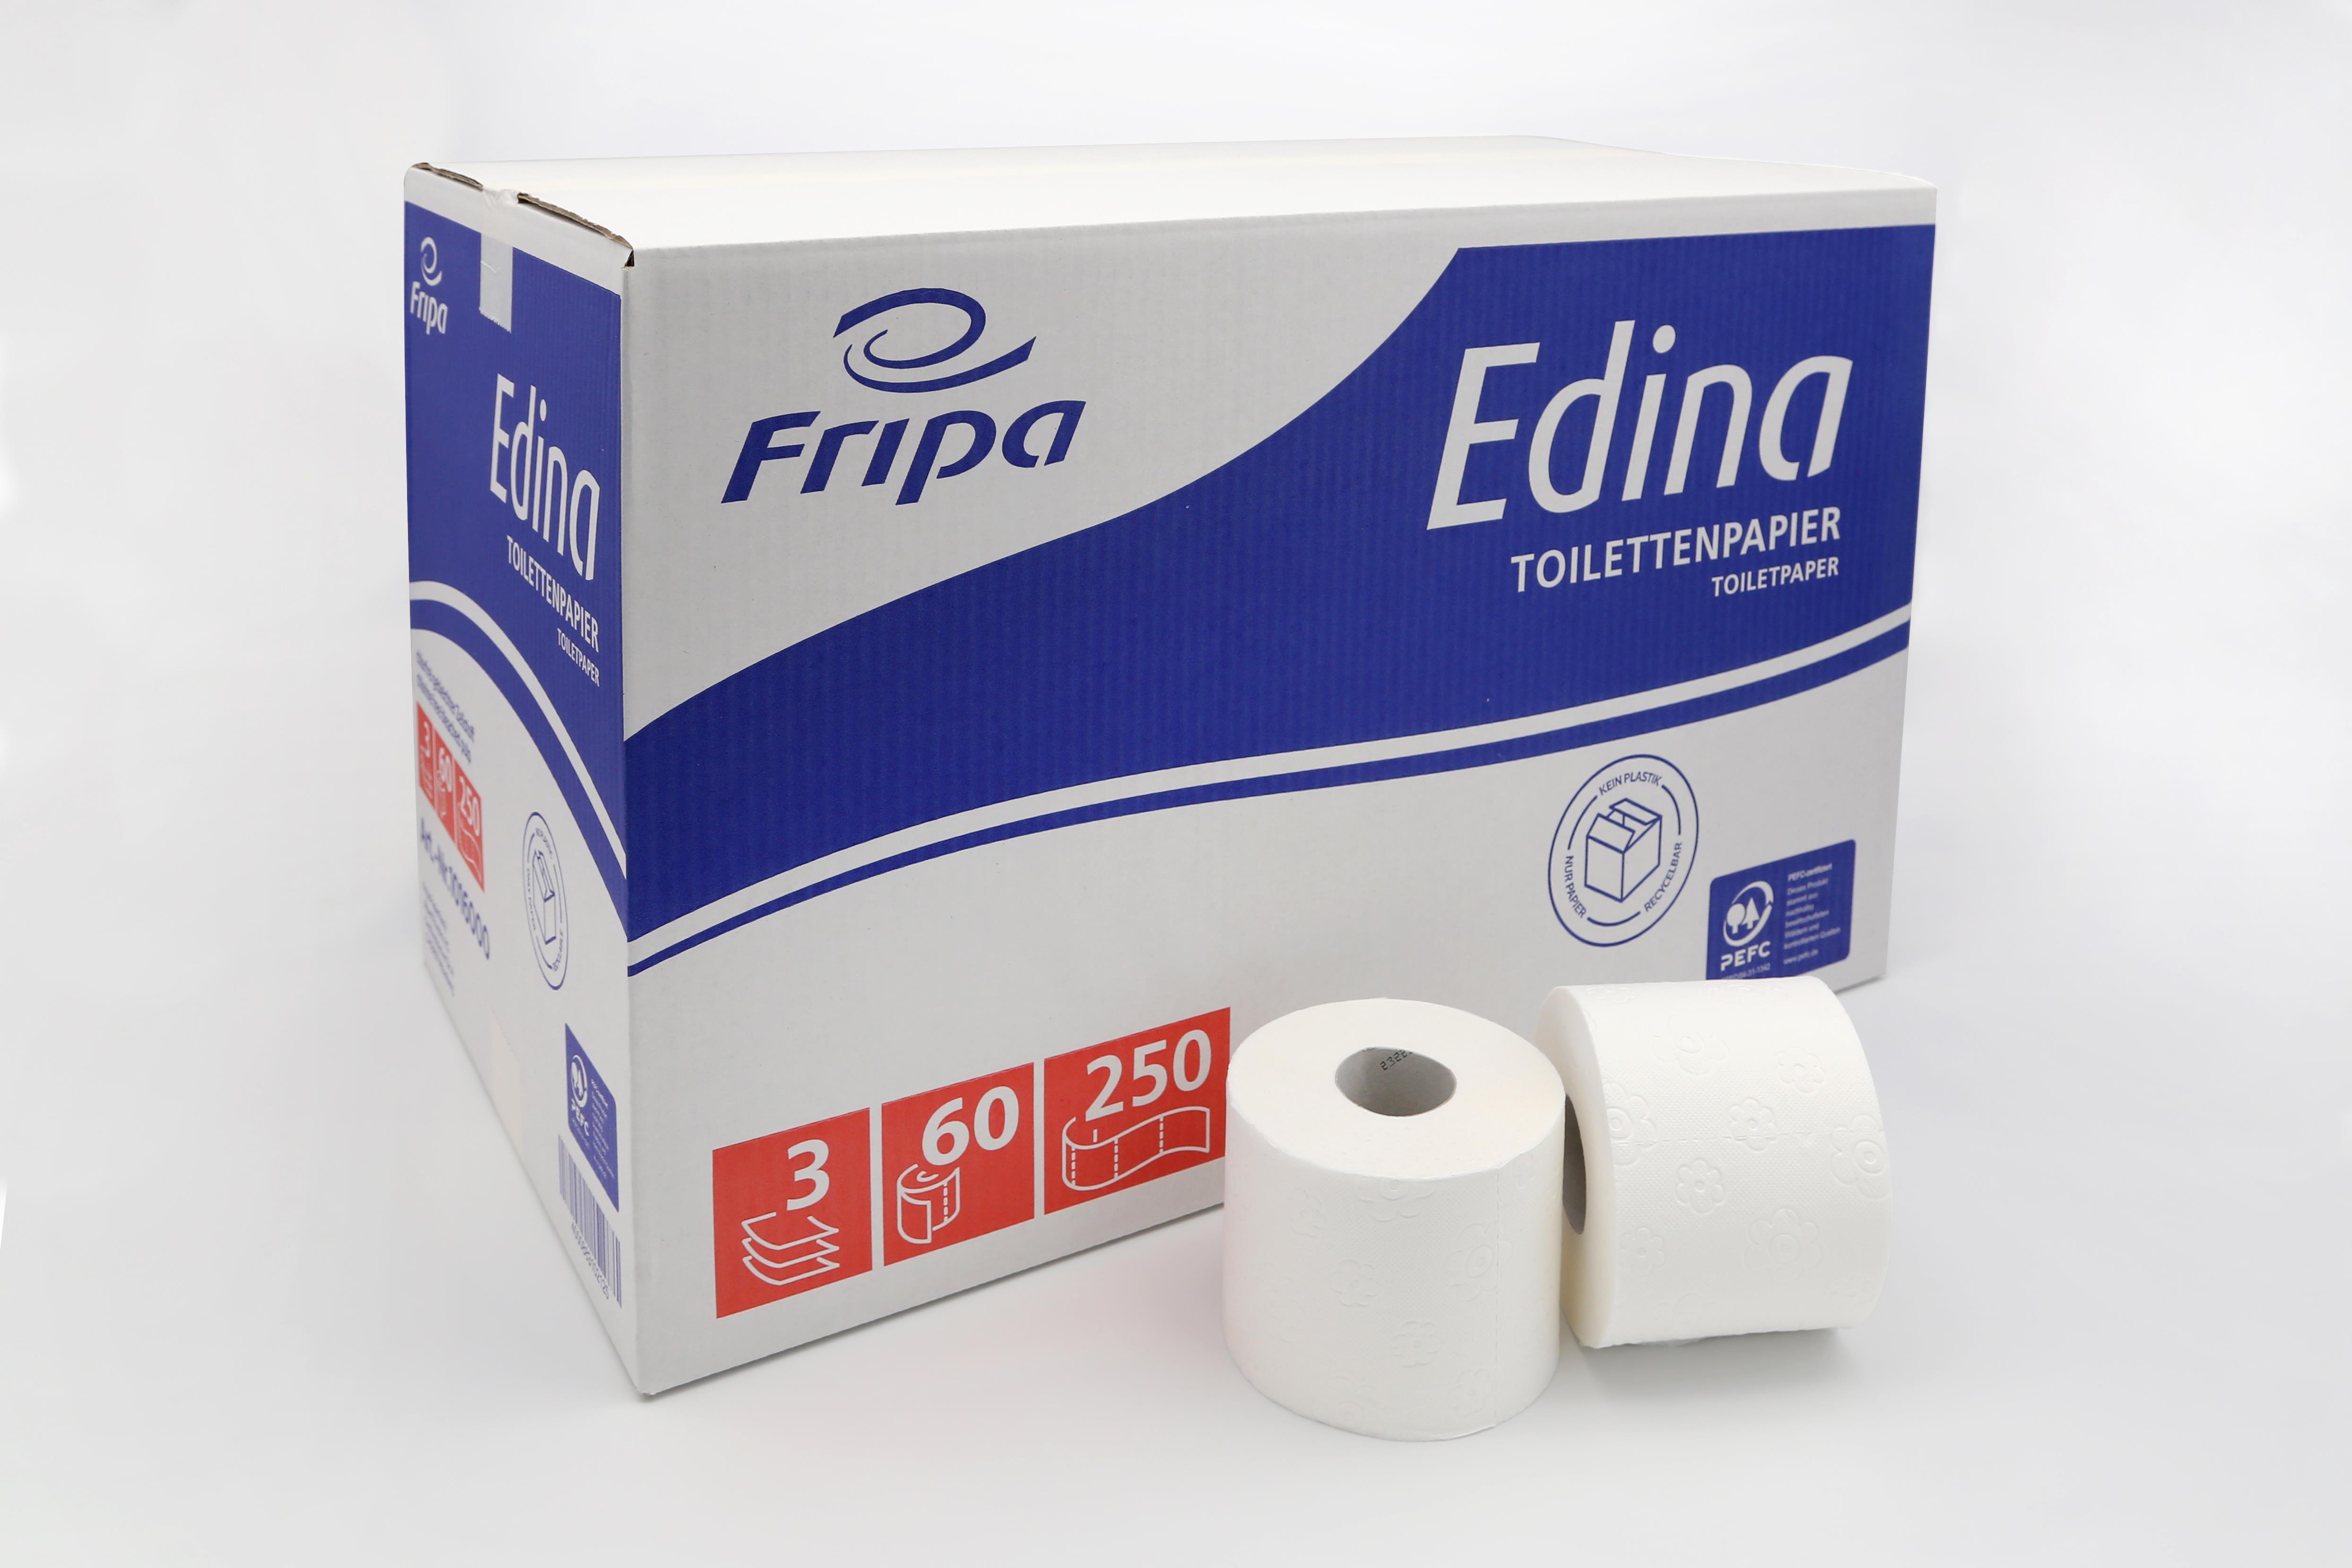 Toilettenpapier Edina 3 lagig 250 Blatt Zellstoff - Einzigartig: 60 Rollen im Karton!